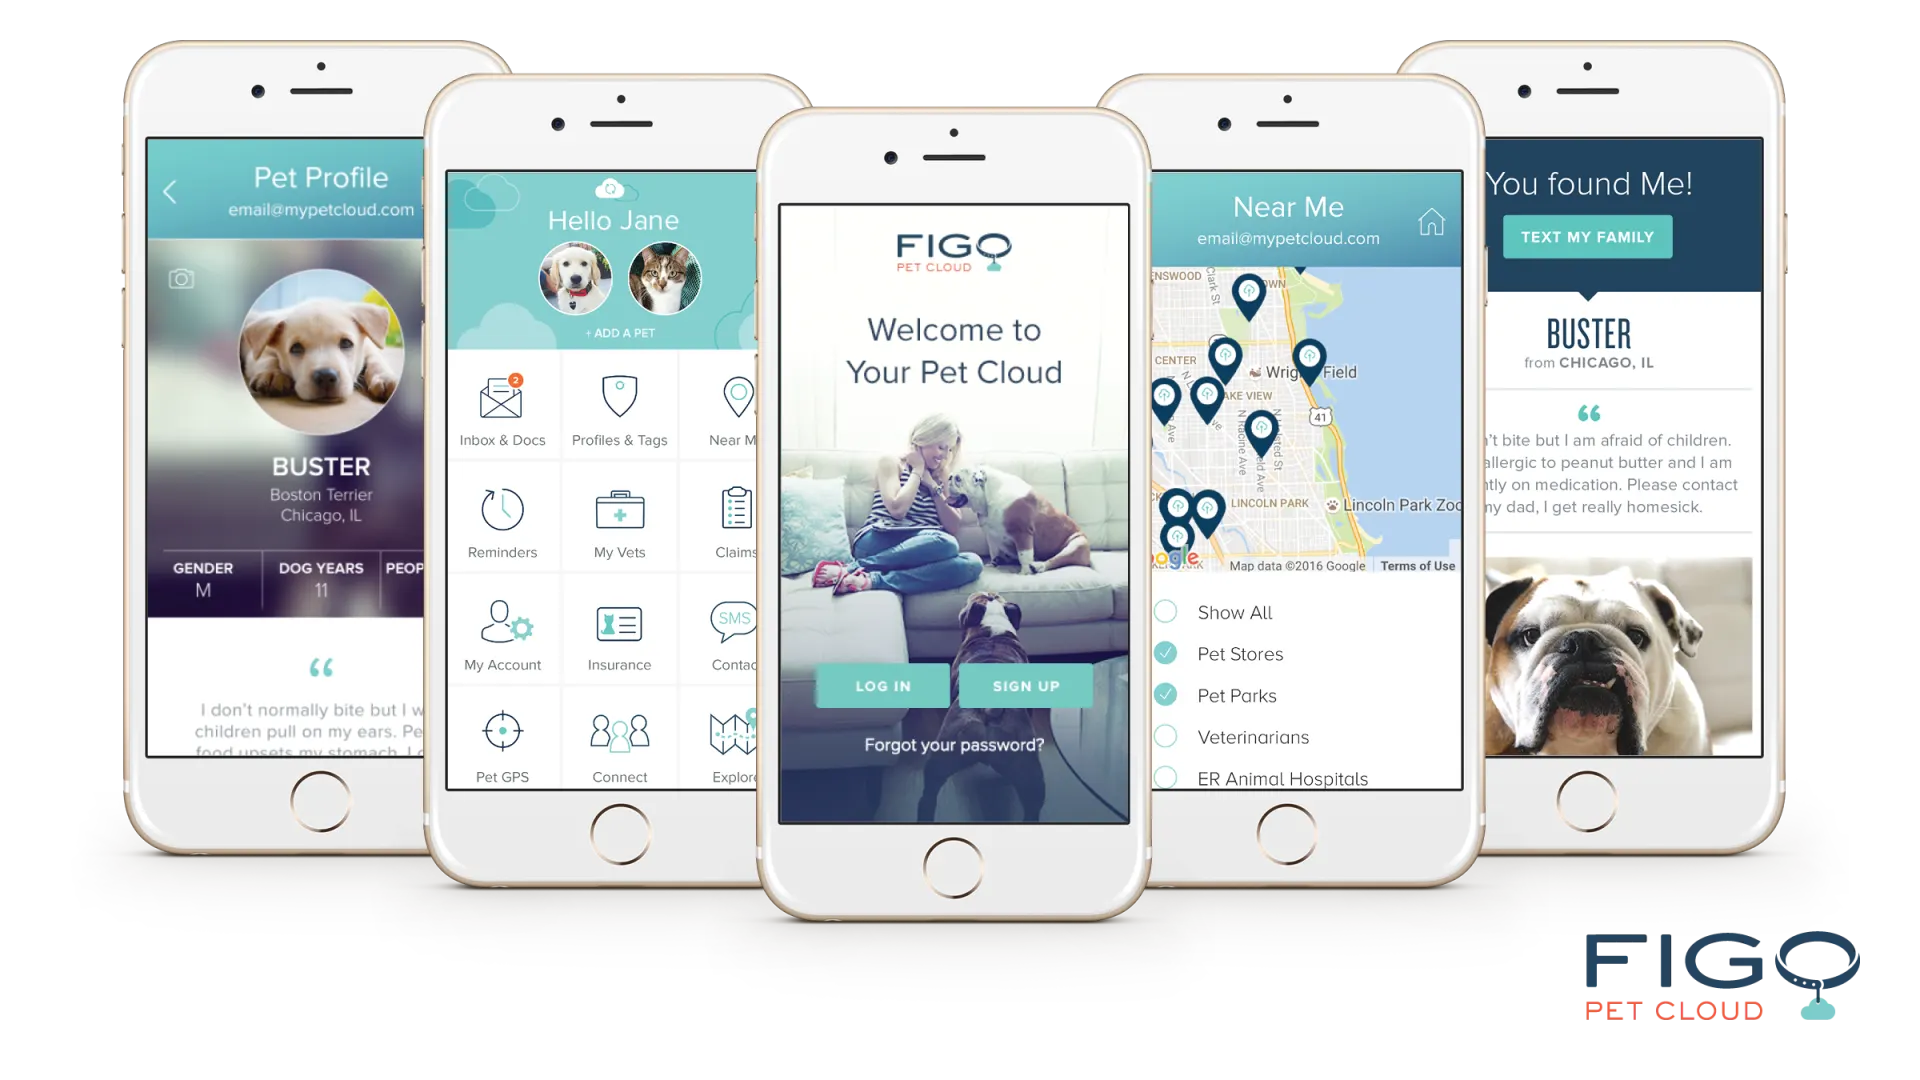 Features of the Figo Pet Cloud mobile app